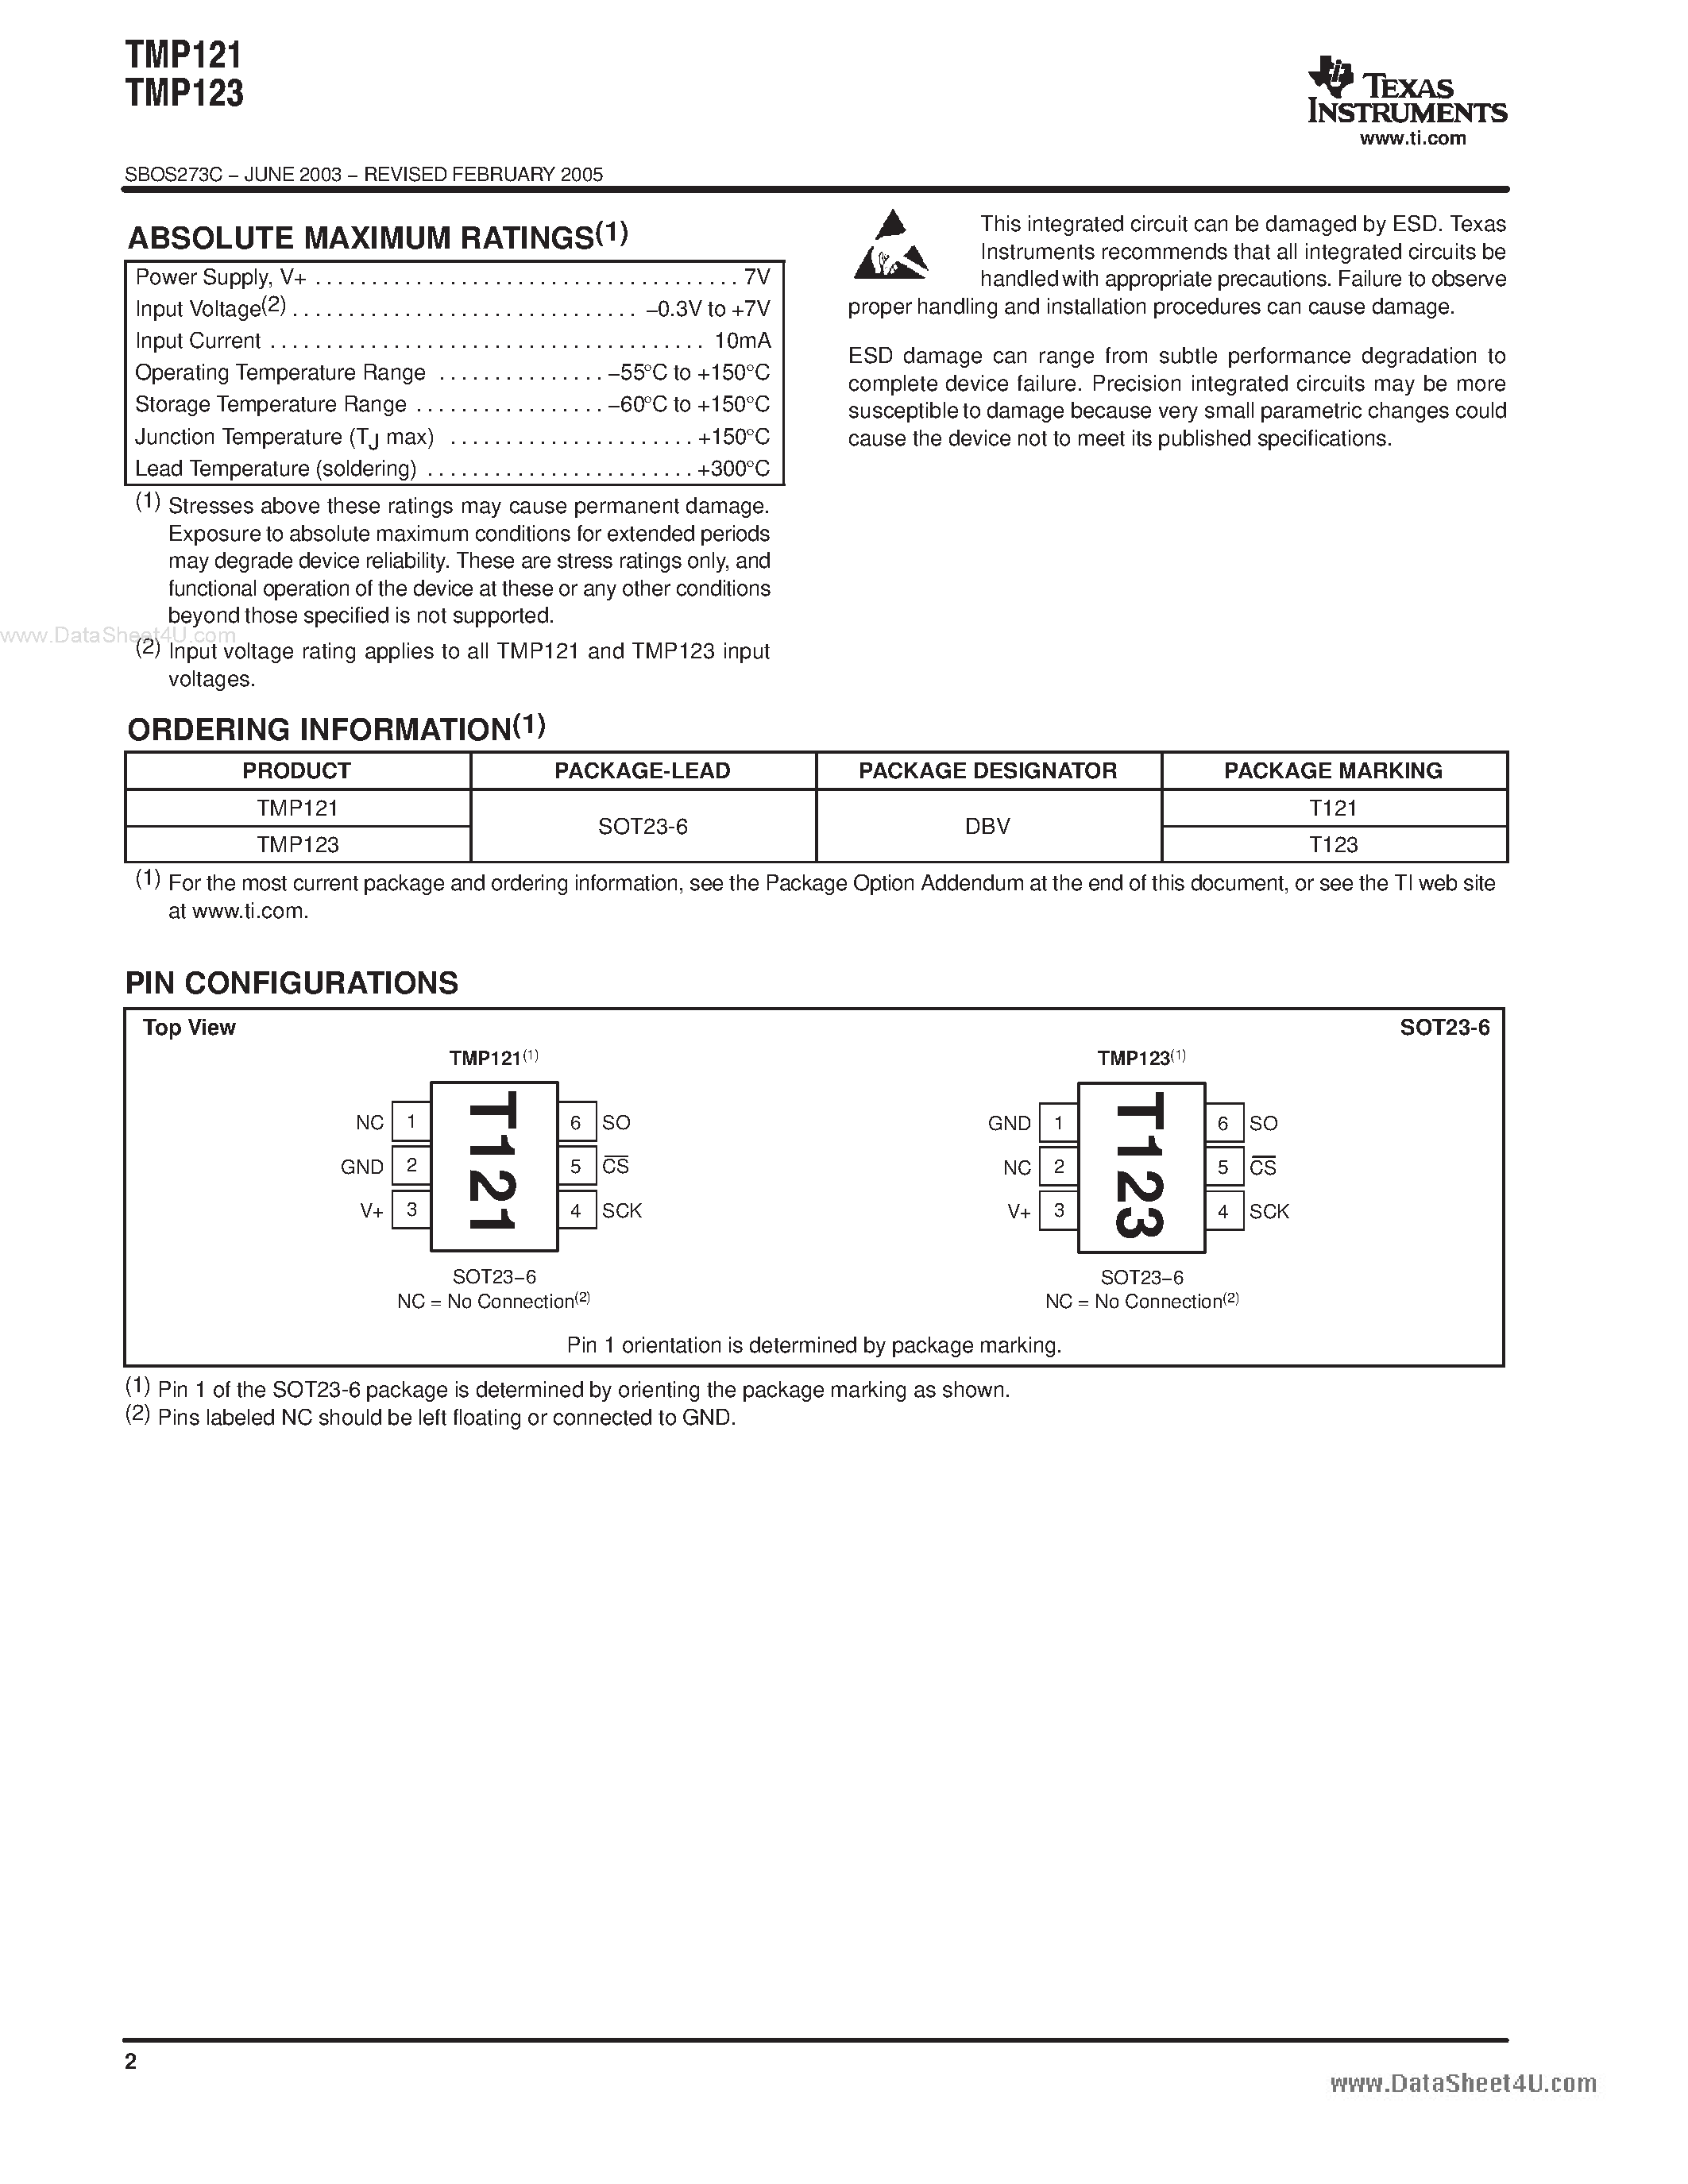 Даташит TMP121 - (TMP121 / TMP123) 1.5C Accurate Digital Temperature Sensor страница 2